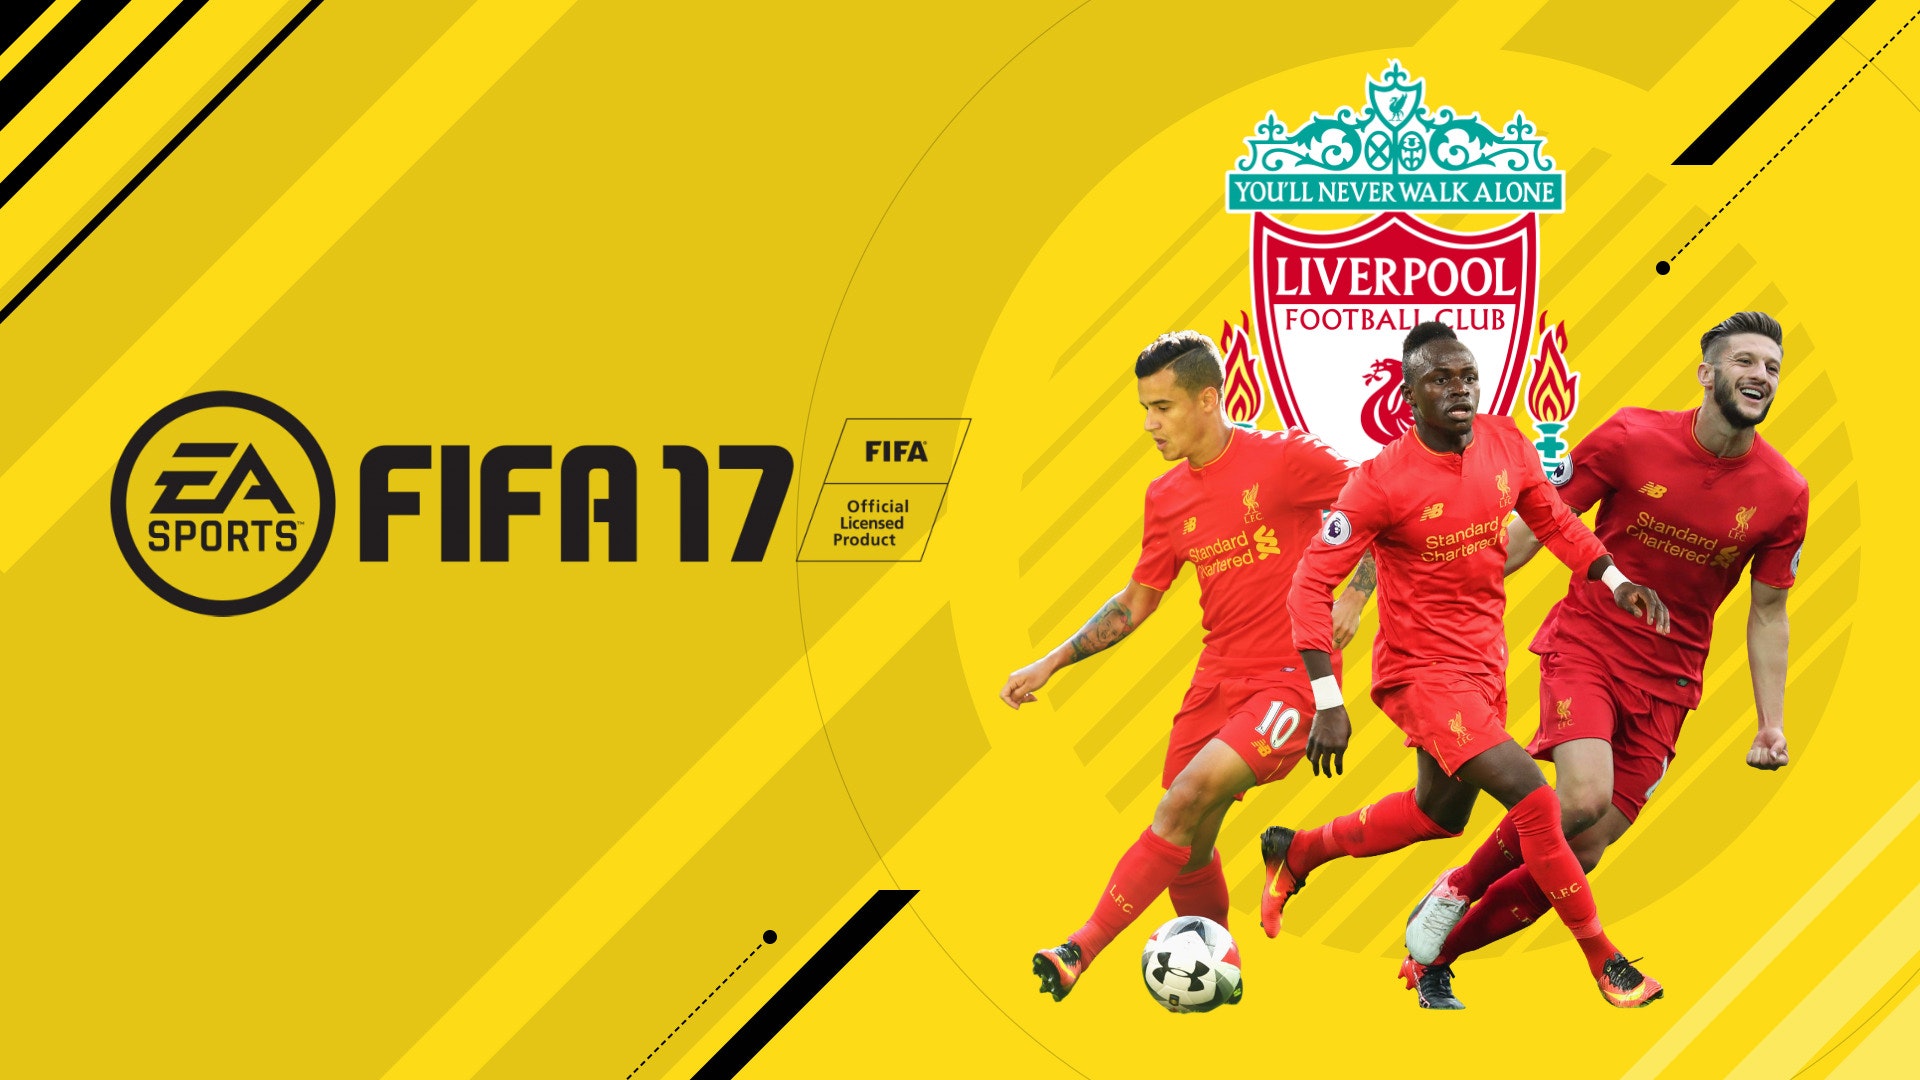 Liverpool Fc - HD Wallpaper 